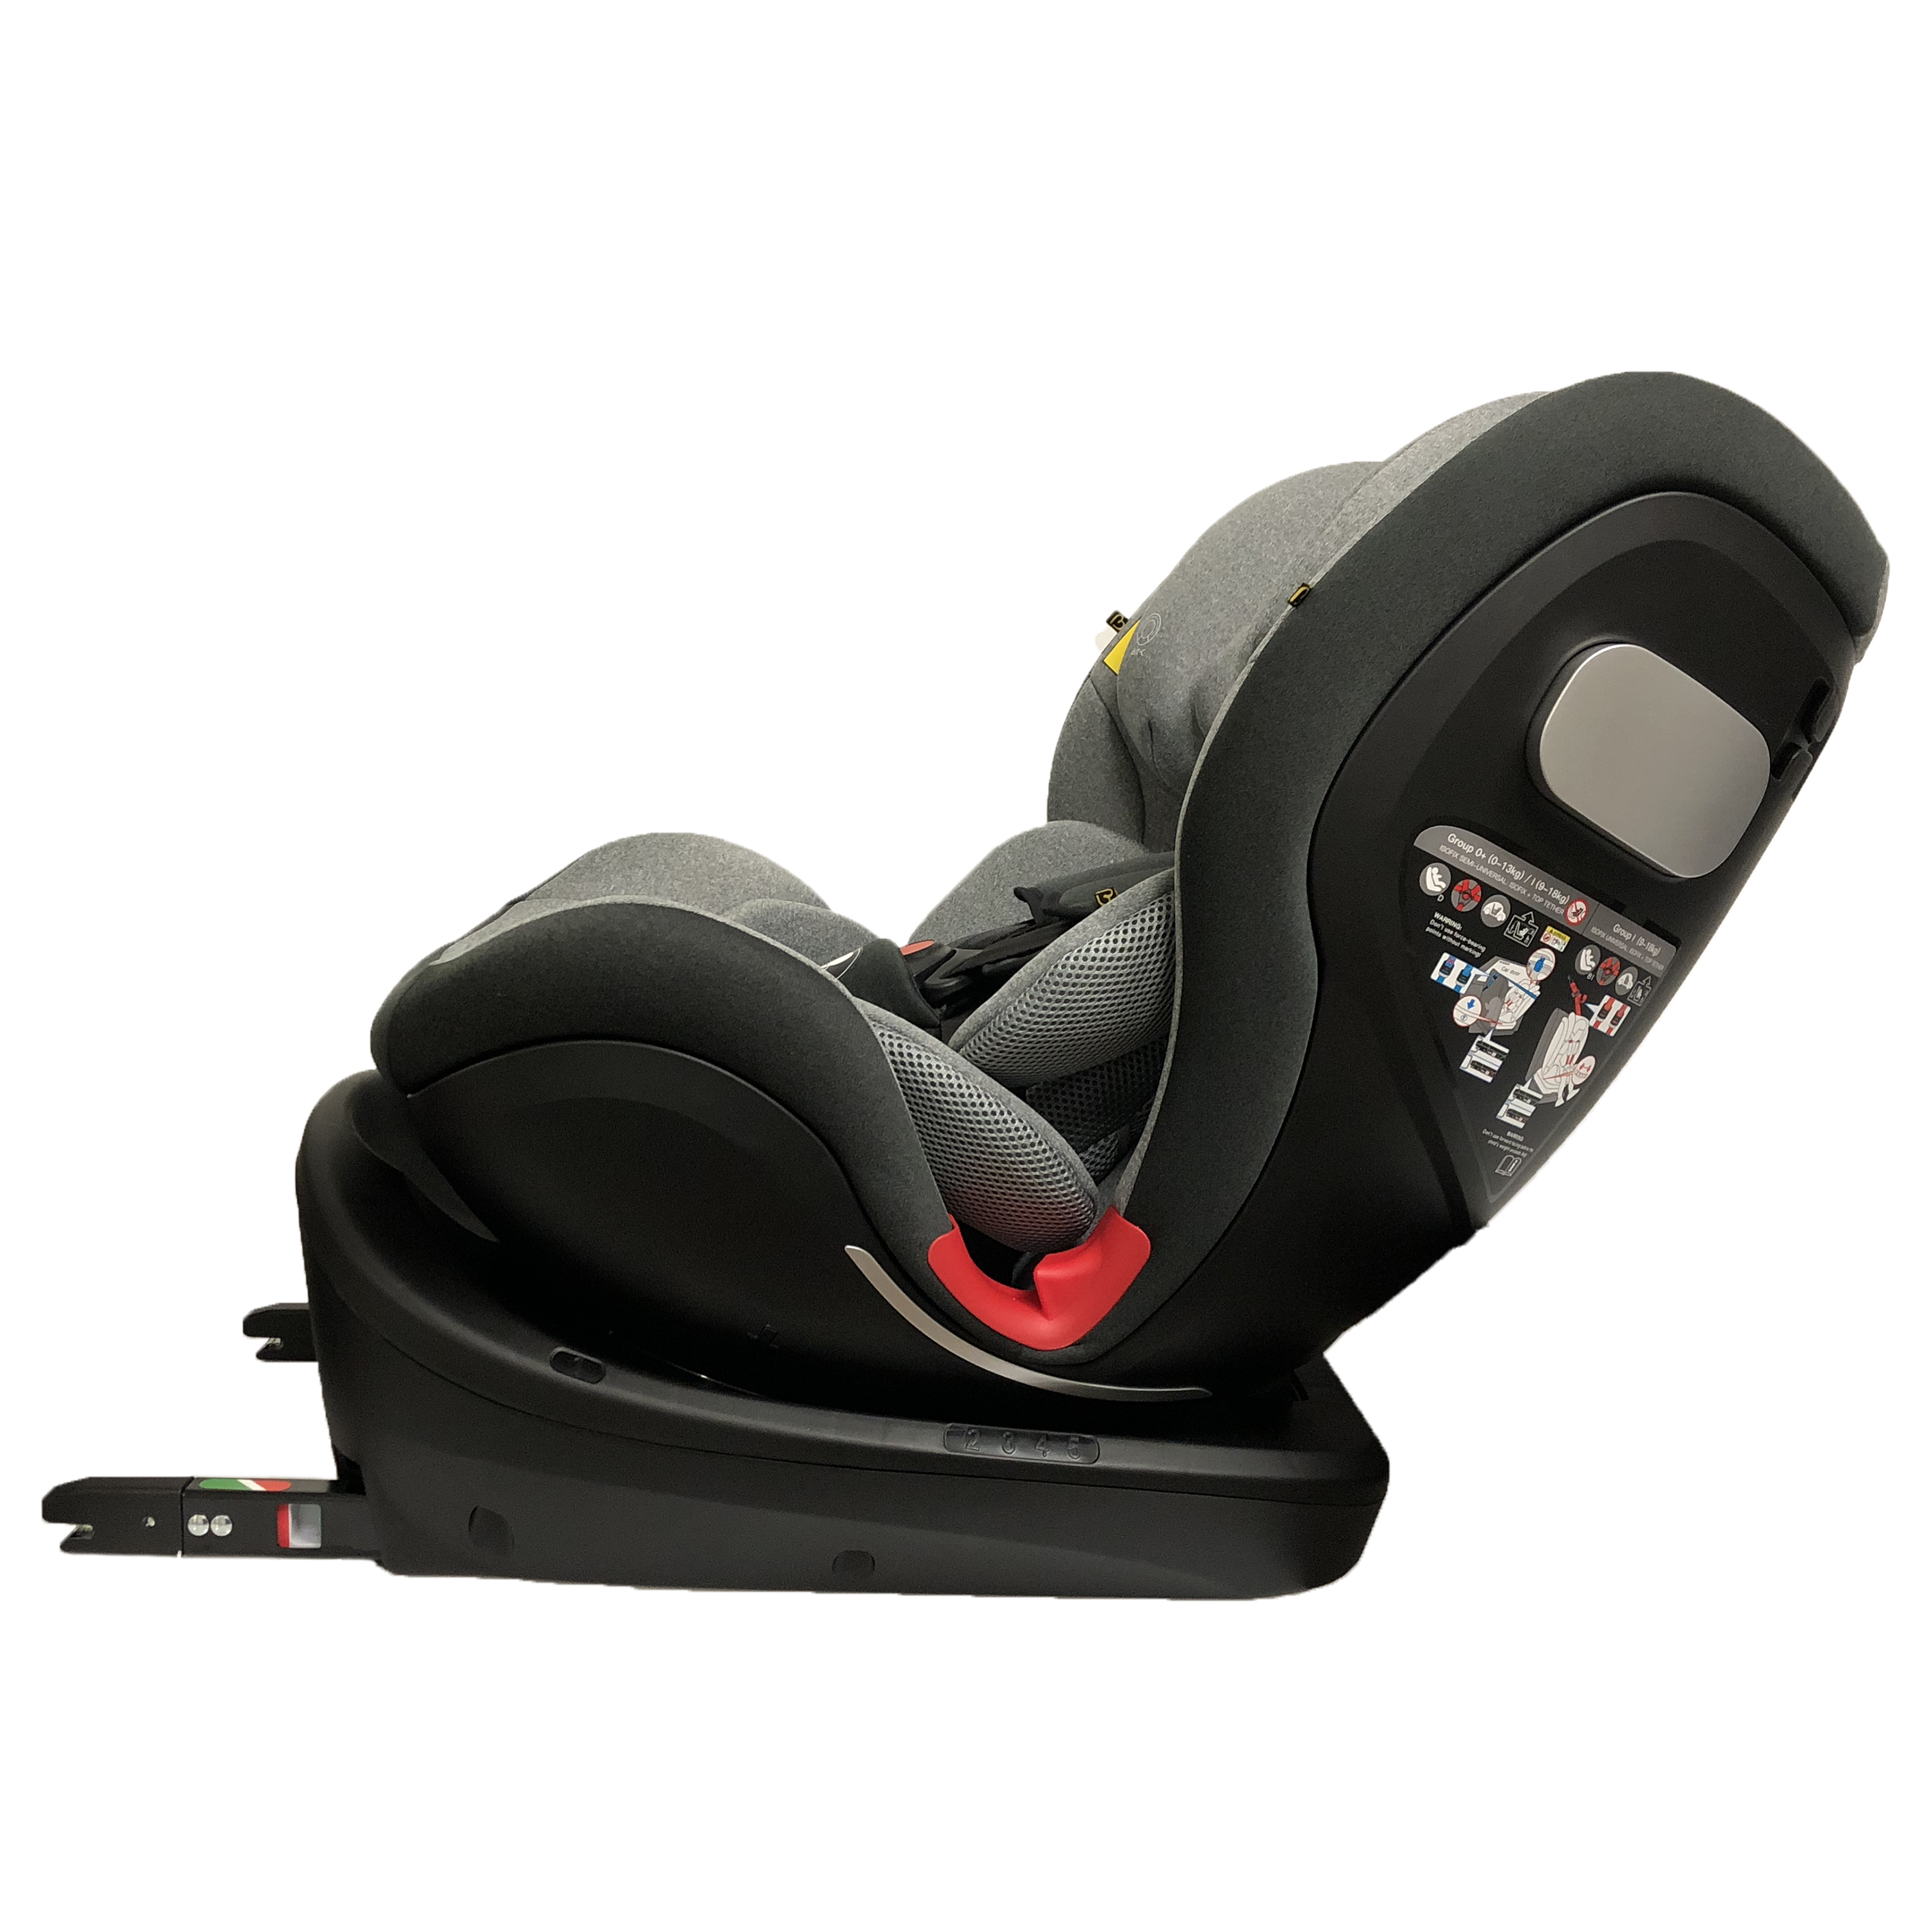 Bonbijou Orbit Car Seat | Little Baby.